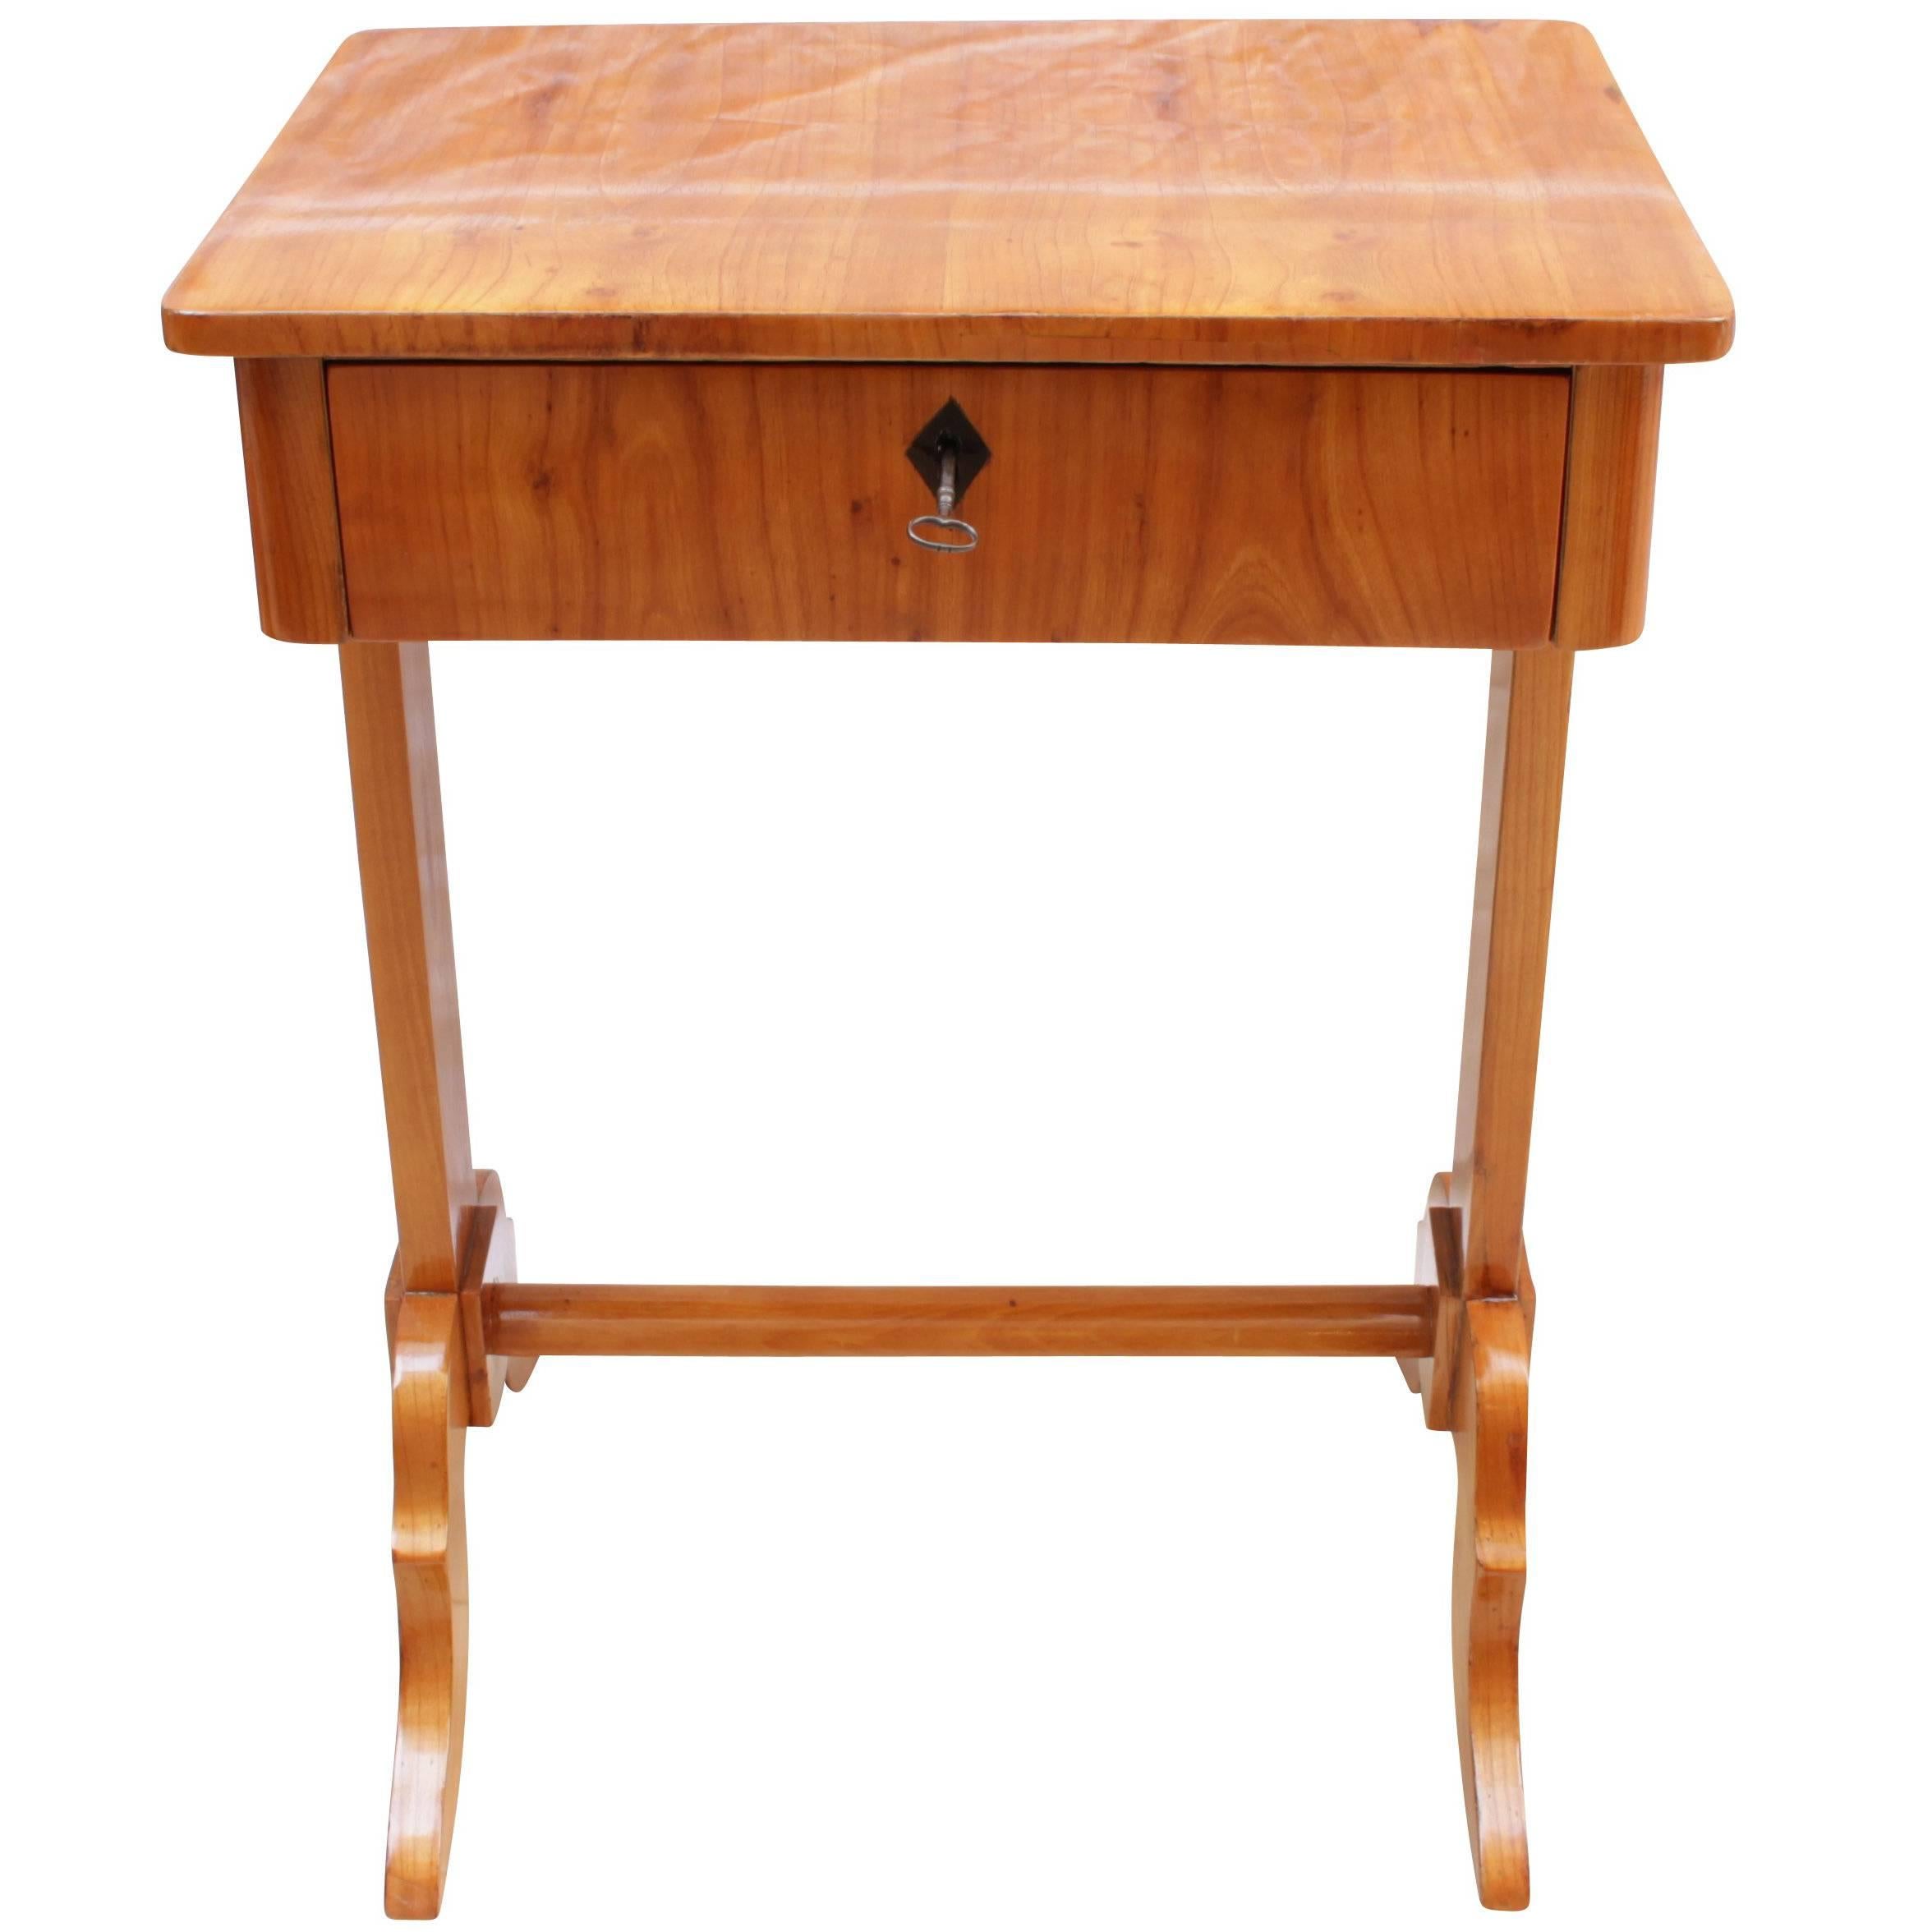 19th Century Biedermeier Sewing or Side Table Made of Cherrywood